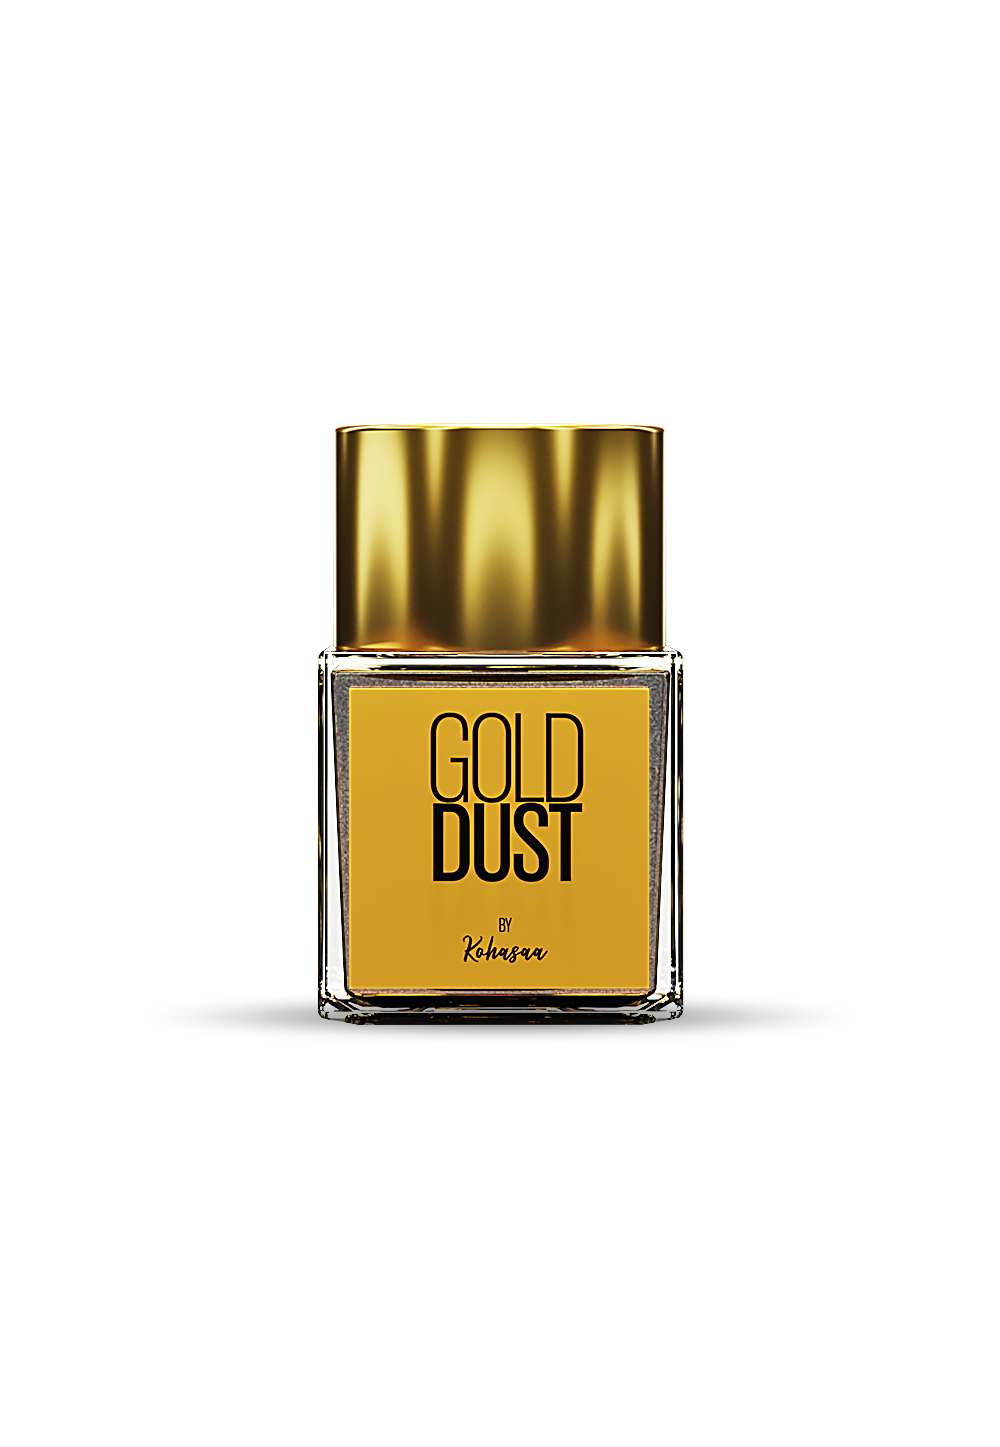 Kohasaa Gold Dust Perfume By Kohasaa 100Ml - Highfy.pk